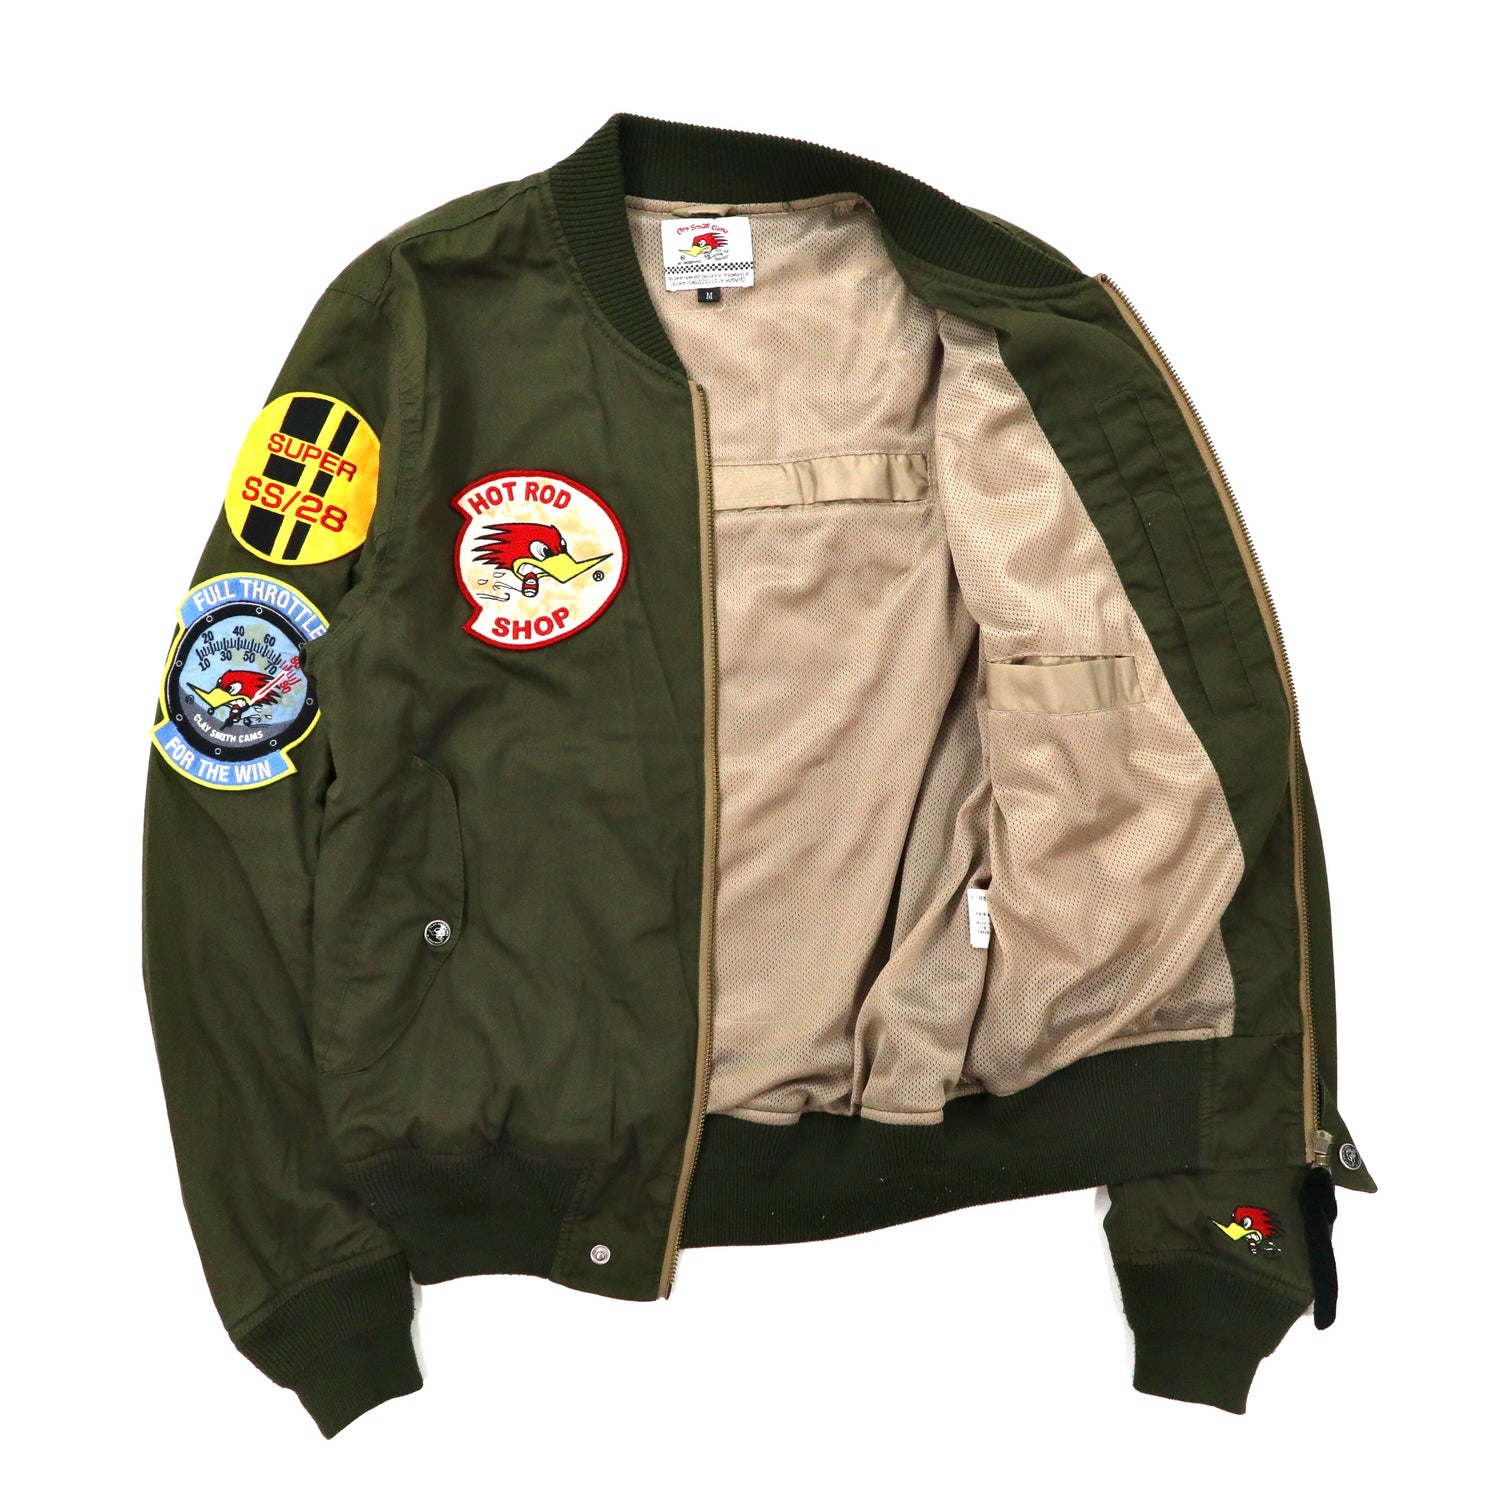 Clay Smith MA-1 Flight Jacket M Khaki Cotton Patch Buck logo